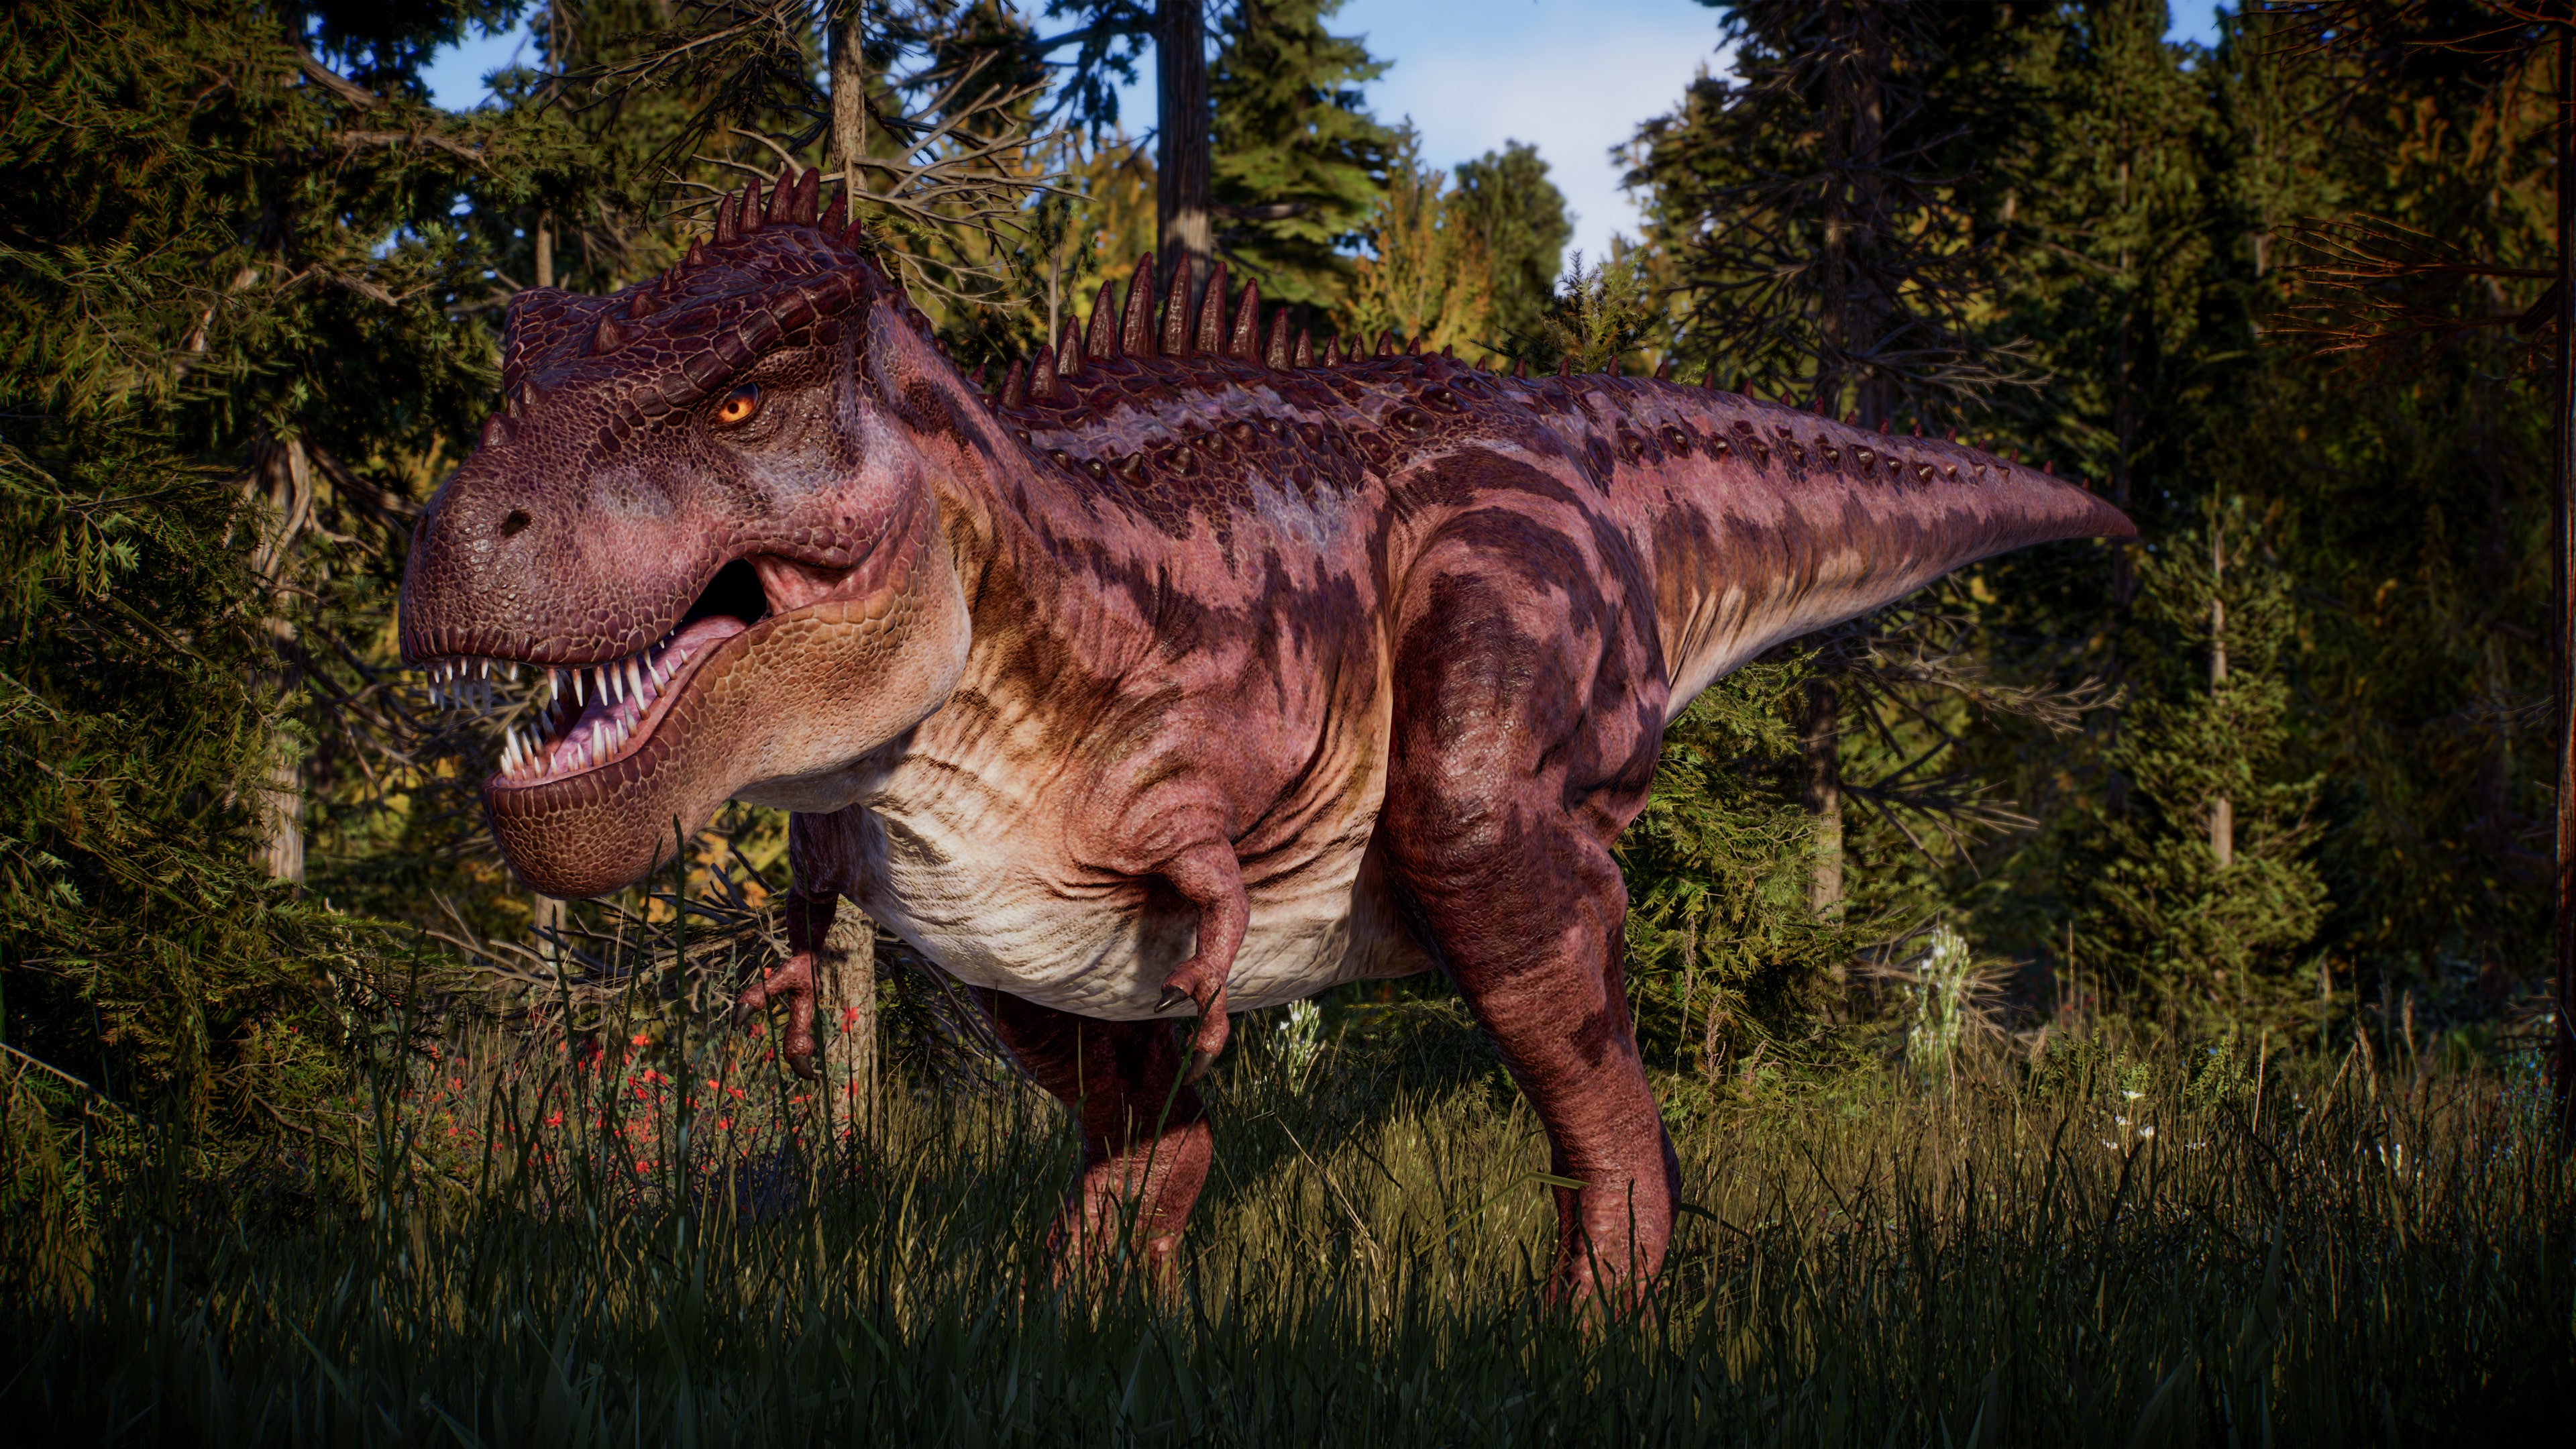 Jurassic World Evolution 2: Pacote Espécies Plumadas on PS4 PS5